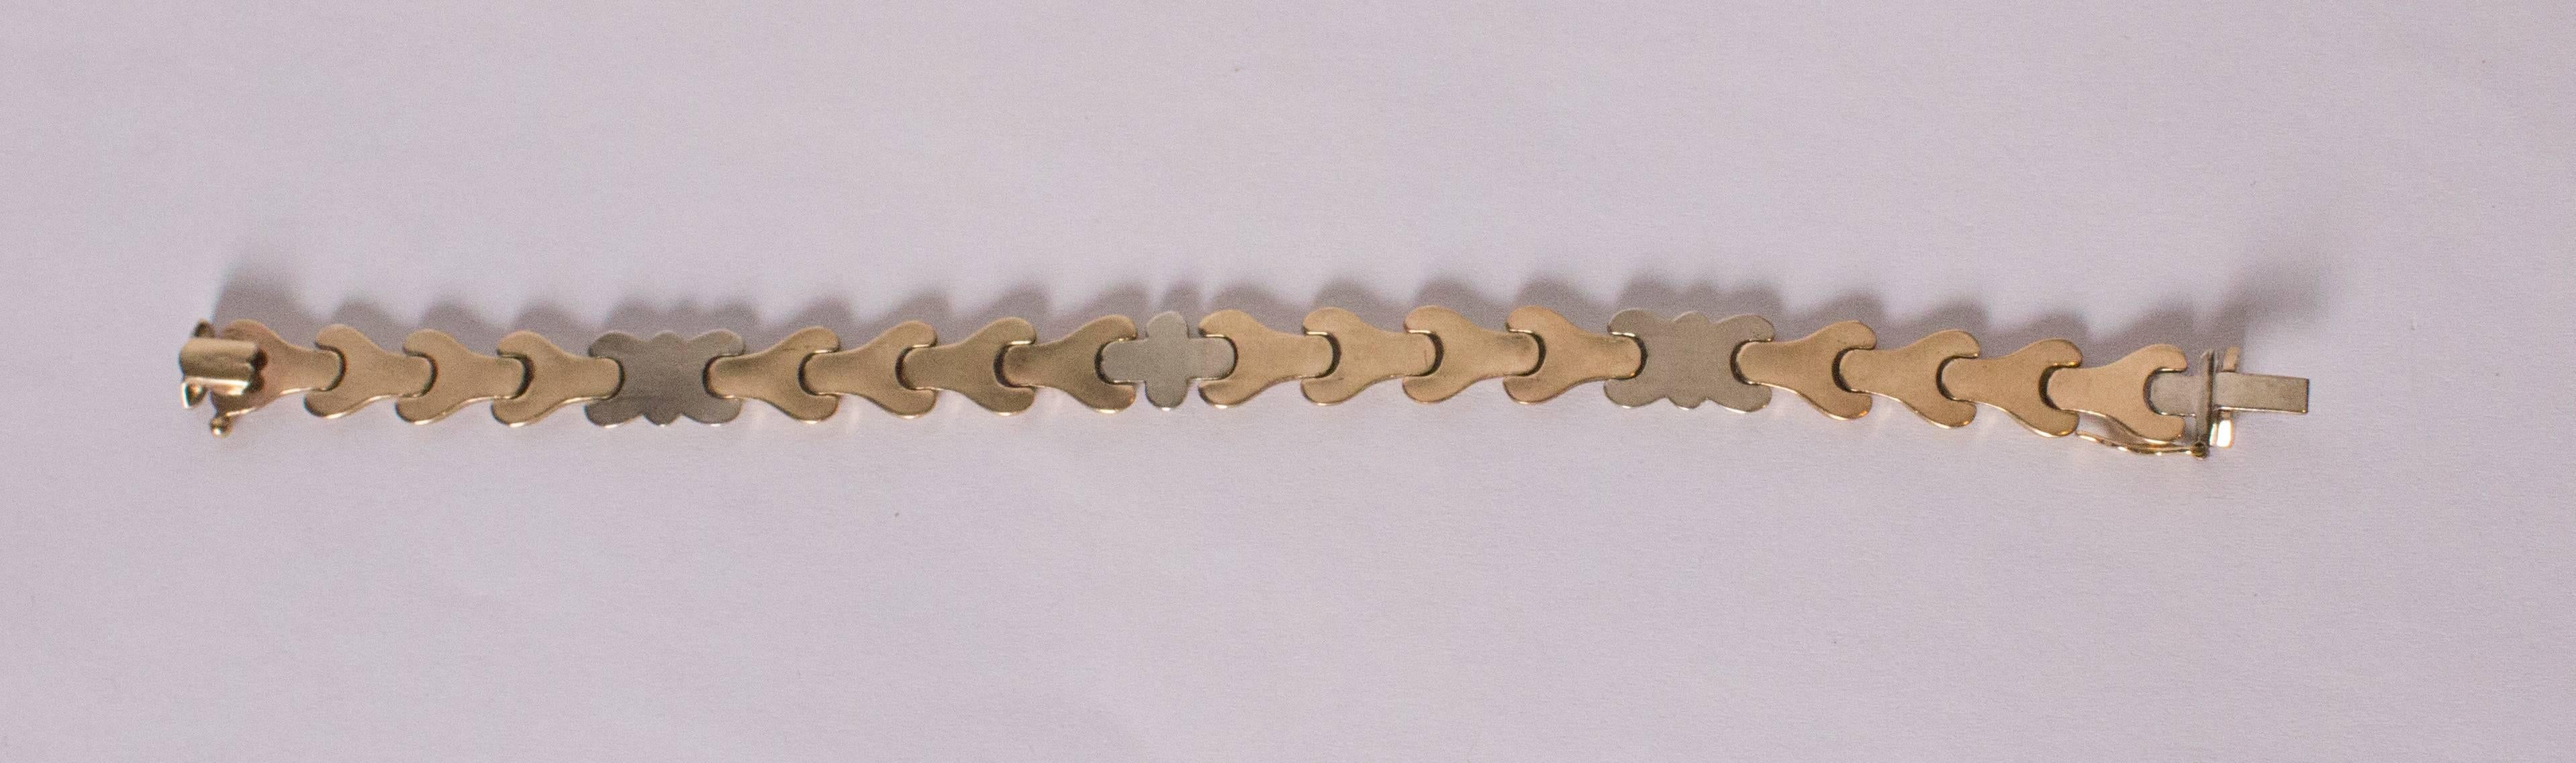 Women's Rose Gold Link Bracelet